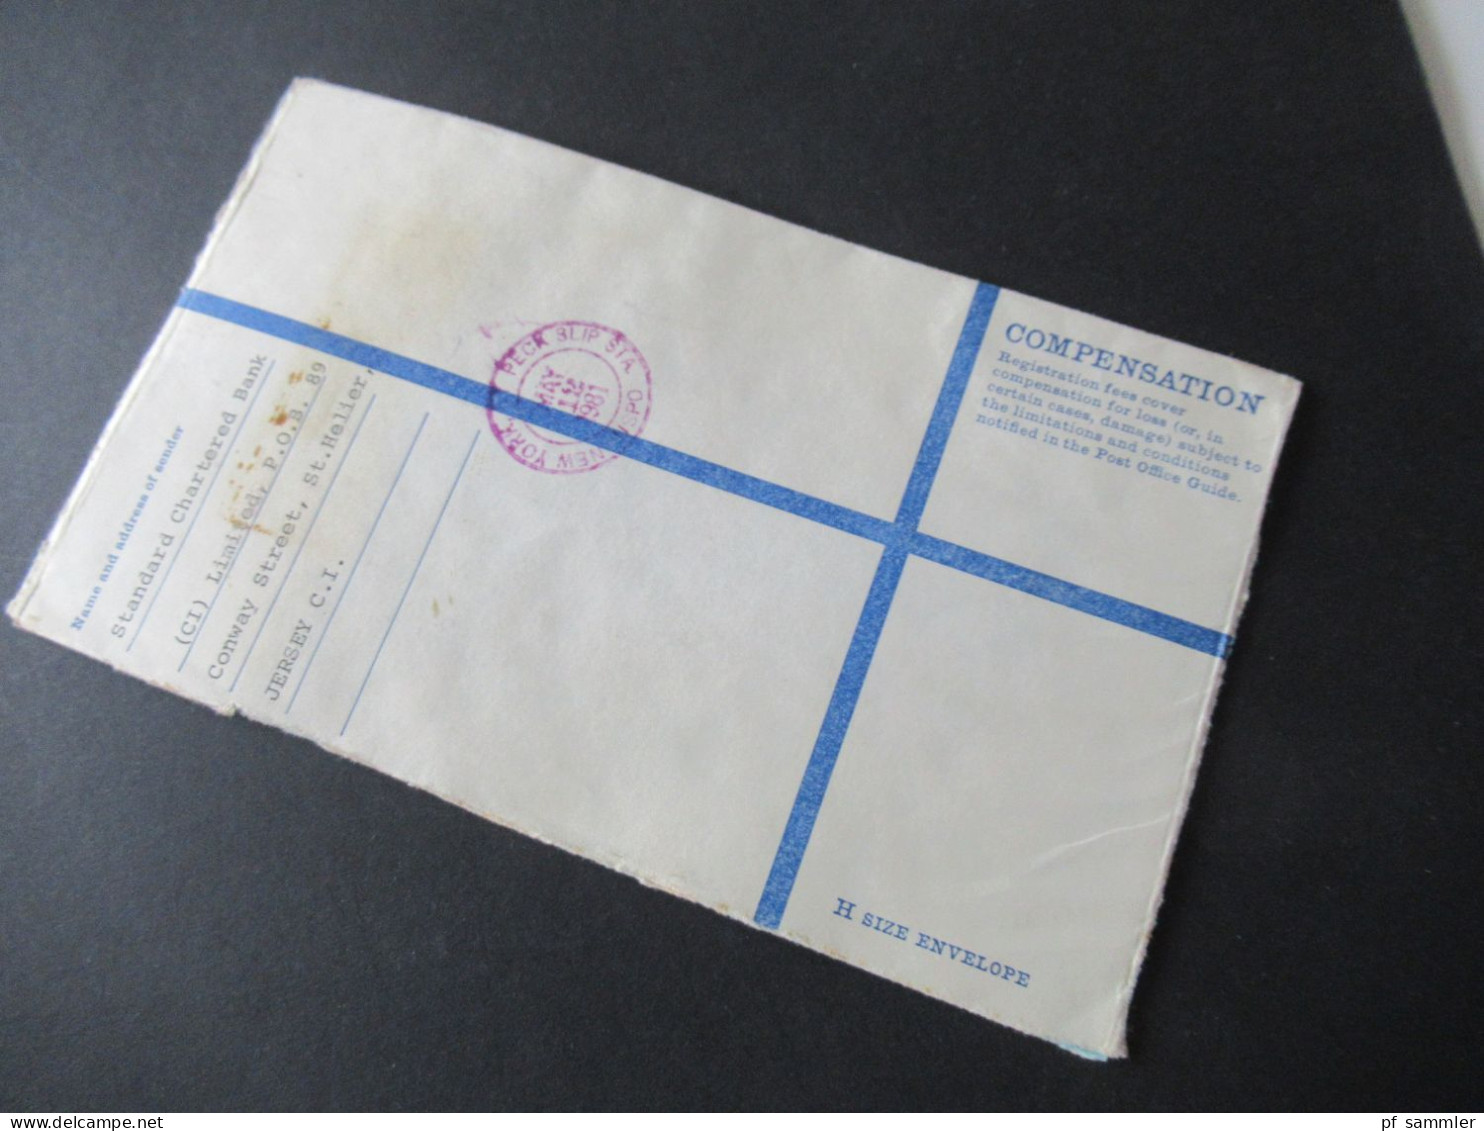 GB Jersey Channel Islands 1981 2x registered letter Postage and registration mit Marken Airmail nach New York USA